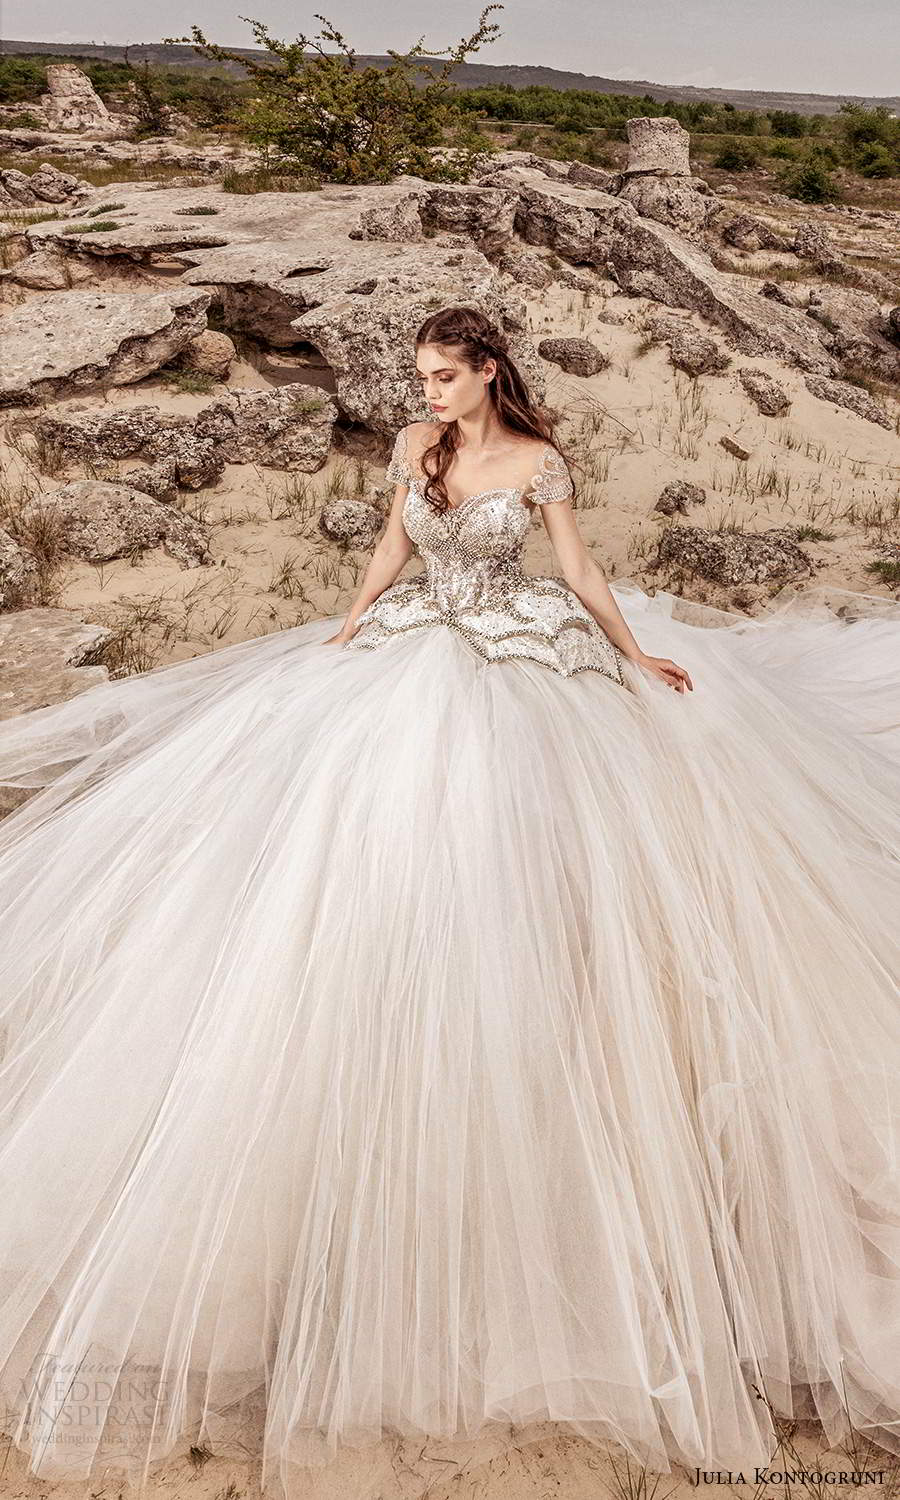 julia kontogruni 2021 bridal short sleeves sweetheart neckline embellished bodice ball gown wedding dress cathedral train (10) mv